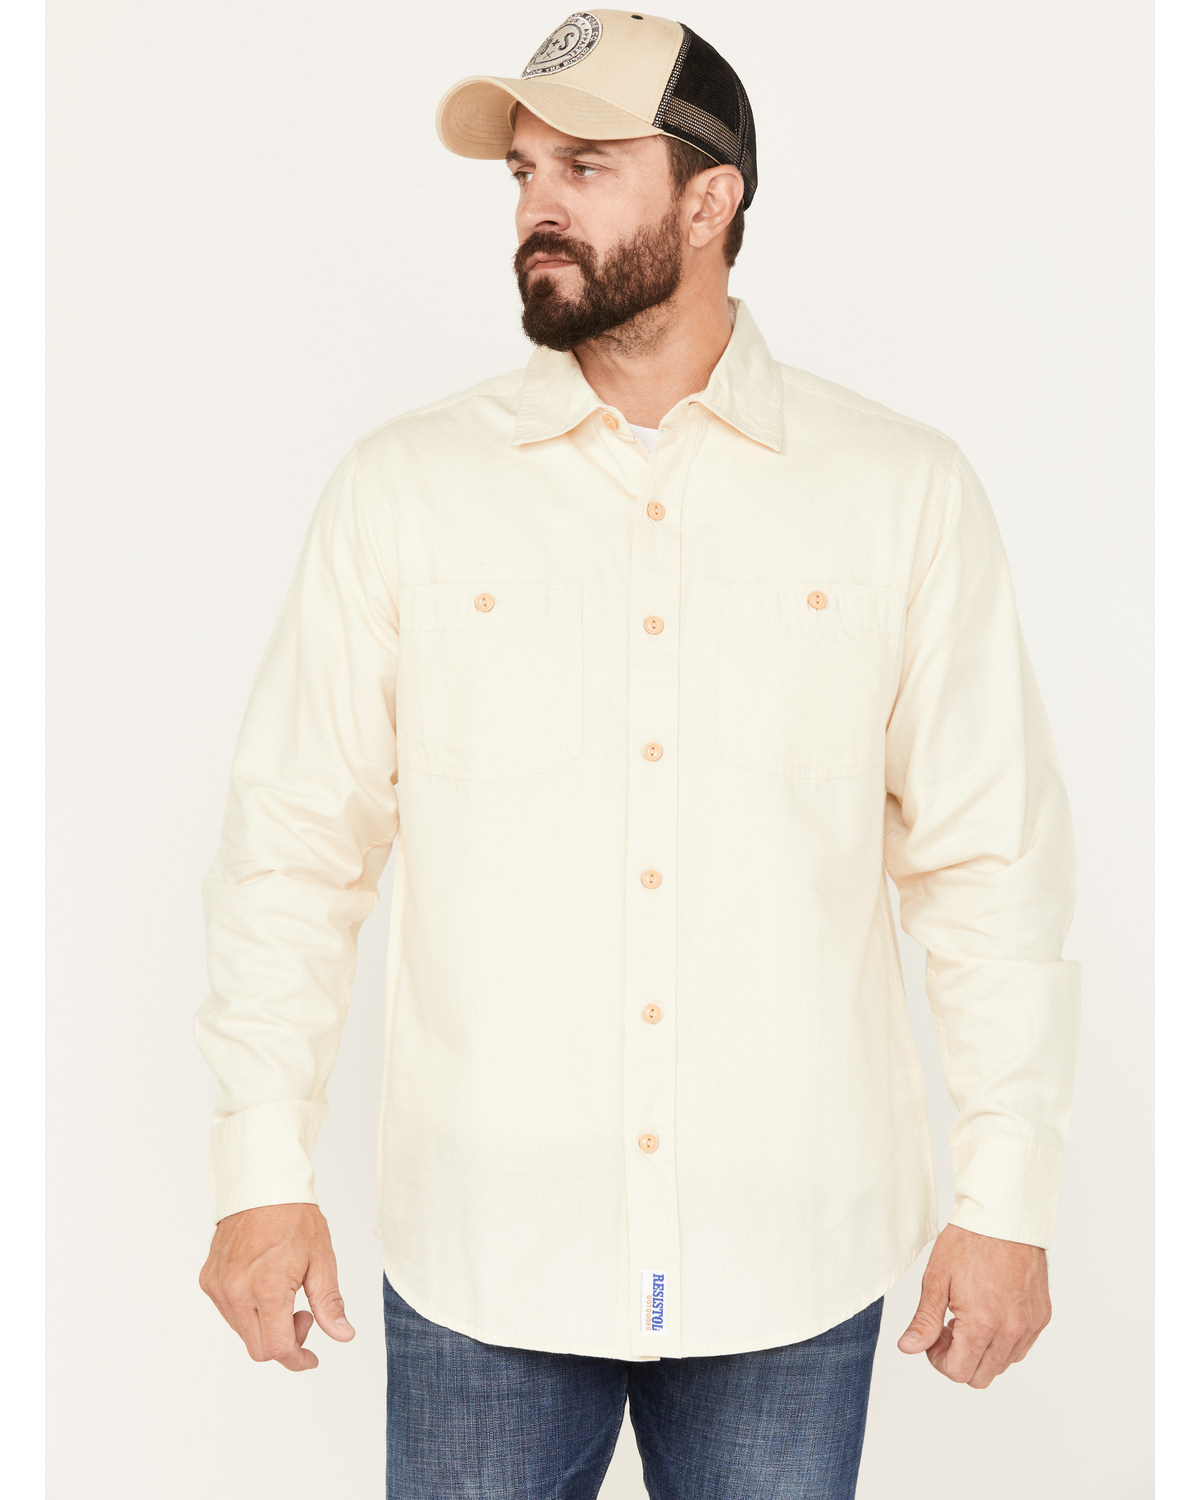 Resistol Men's Aspen Solid Button Down Western Shirt